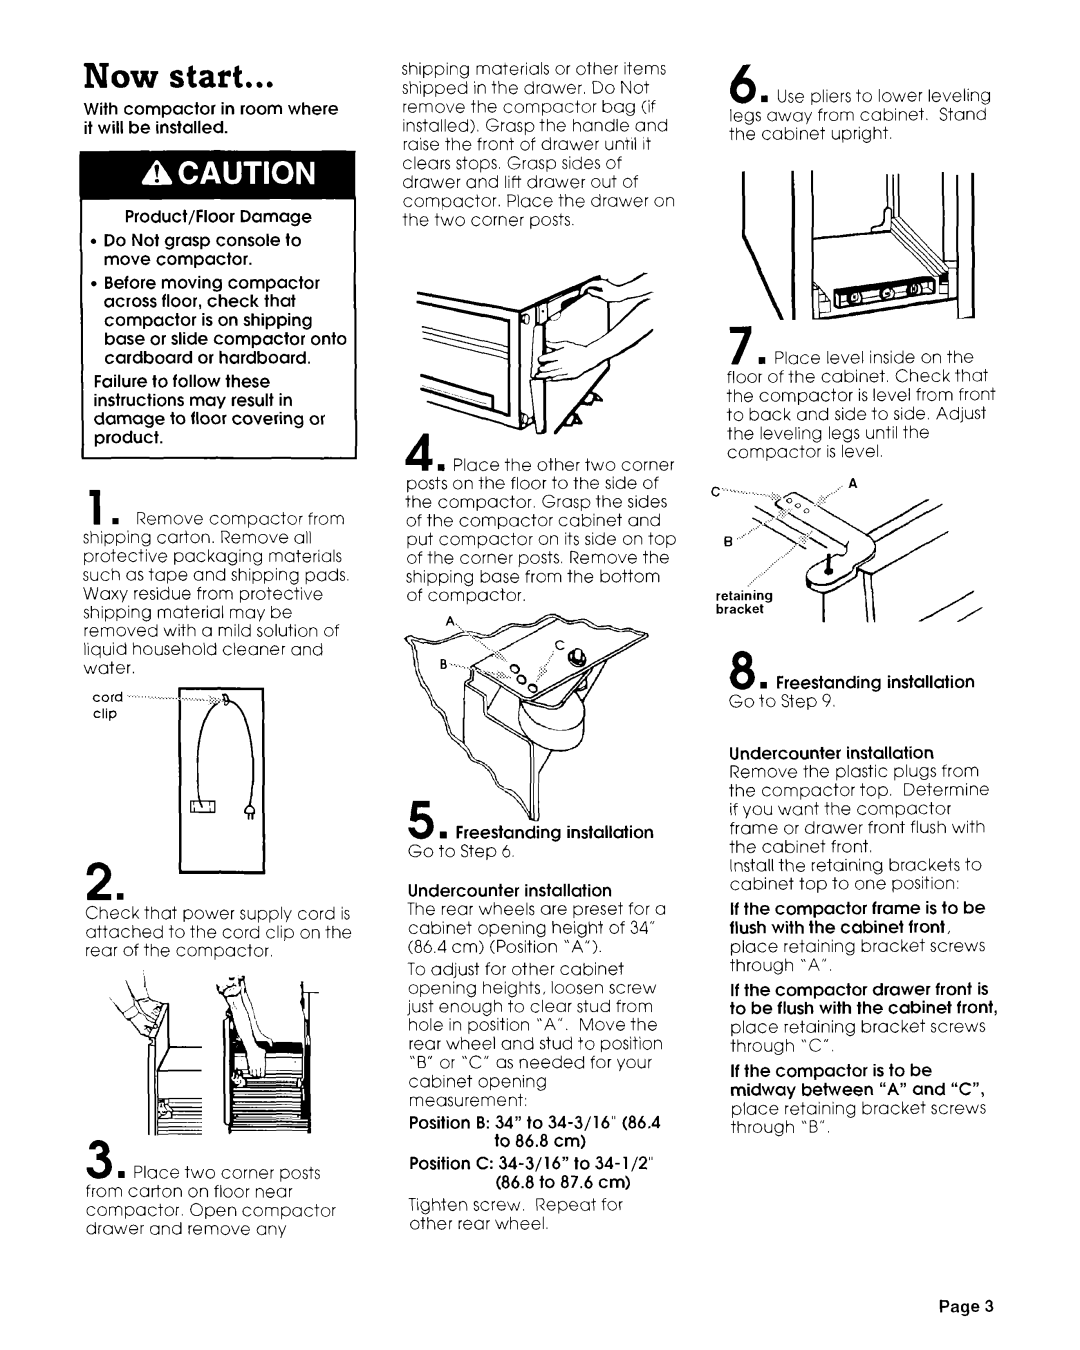 KitchenAid compactor installation instructions Now start, 2. r!l 